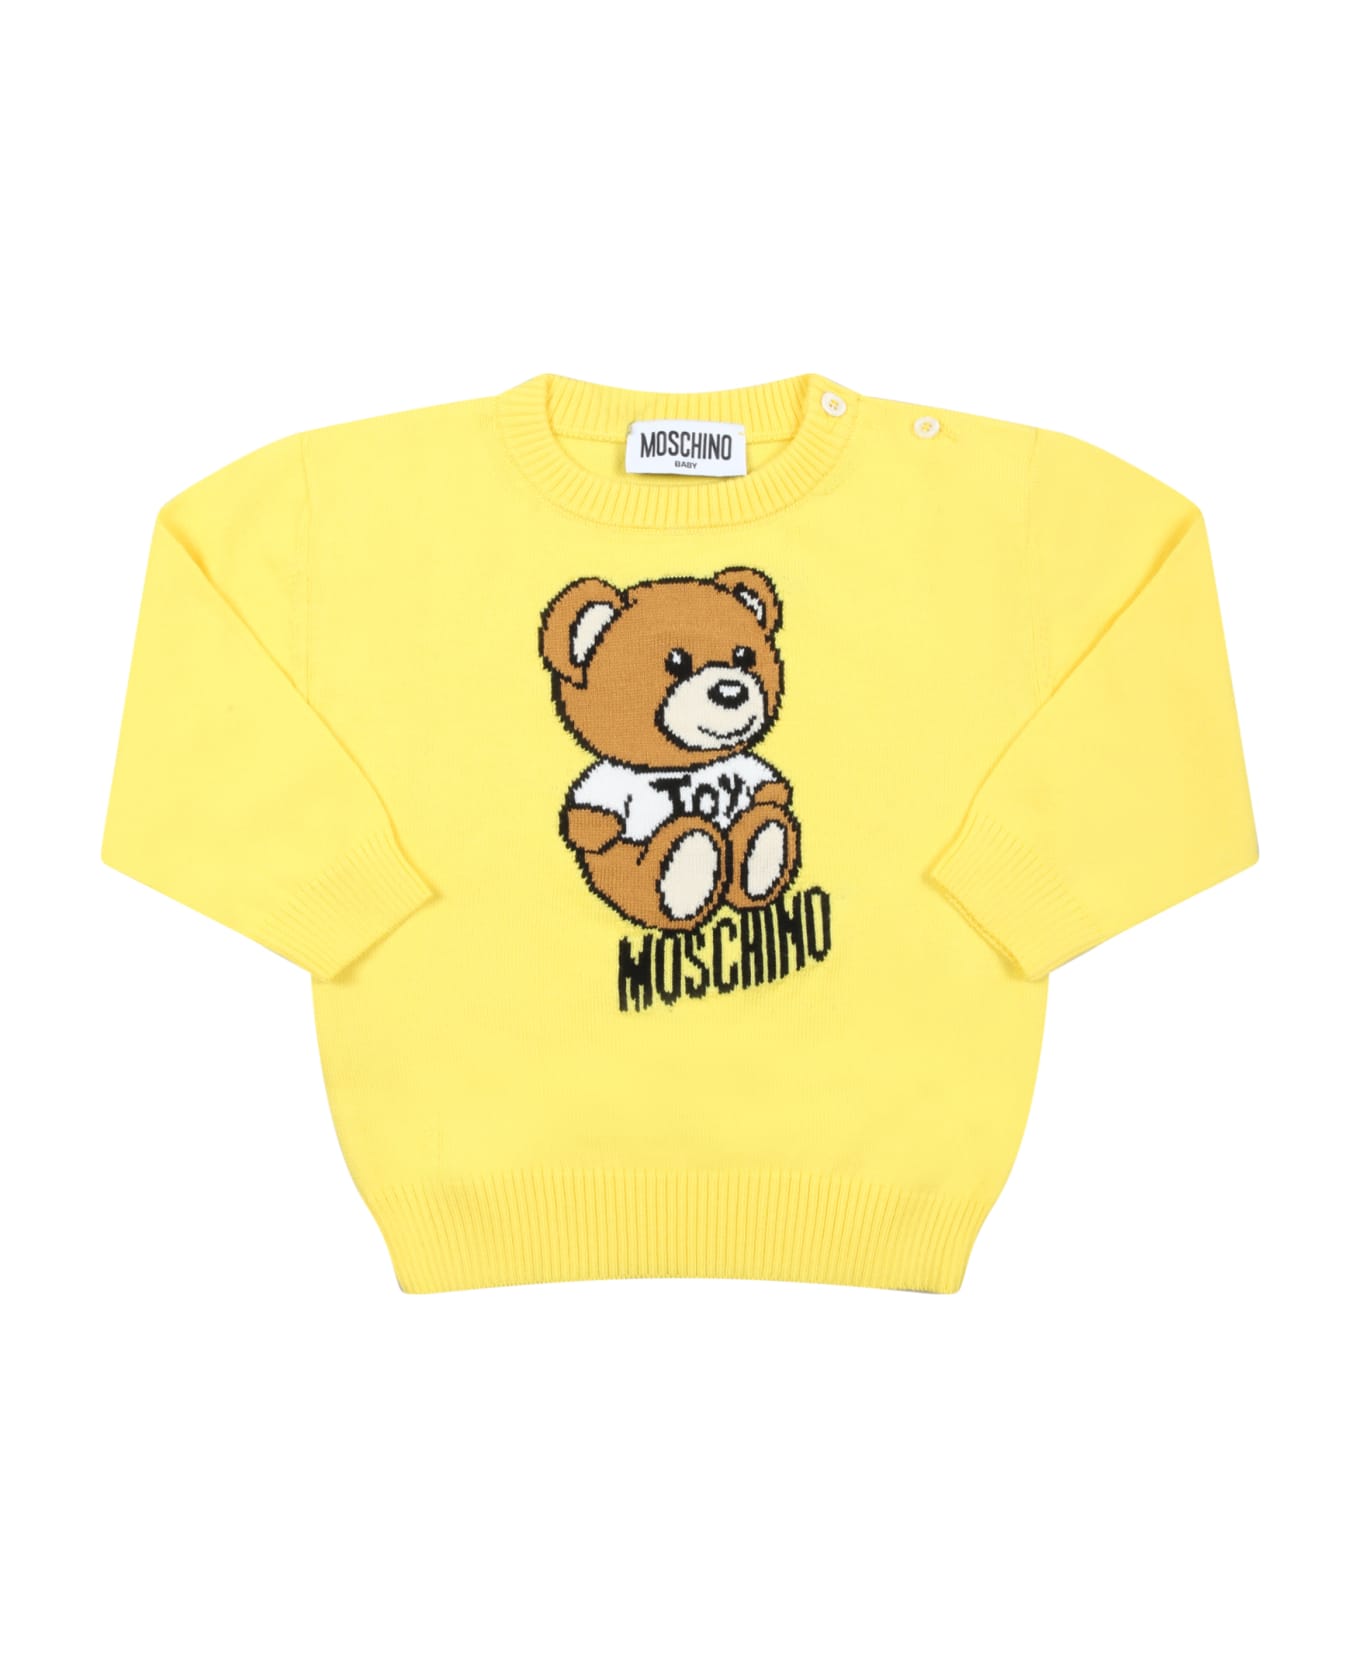 Moschino Yellow Sweat For Babykids With Teddy Bear - Yellow